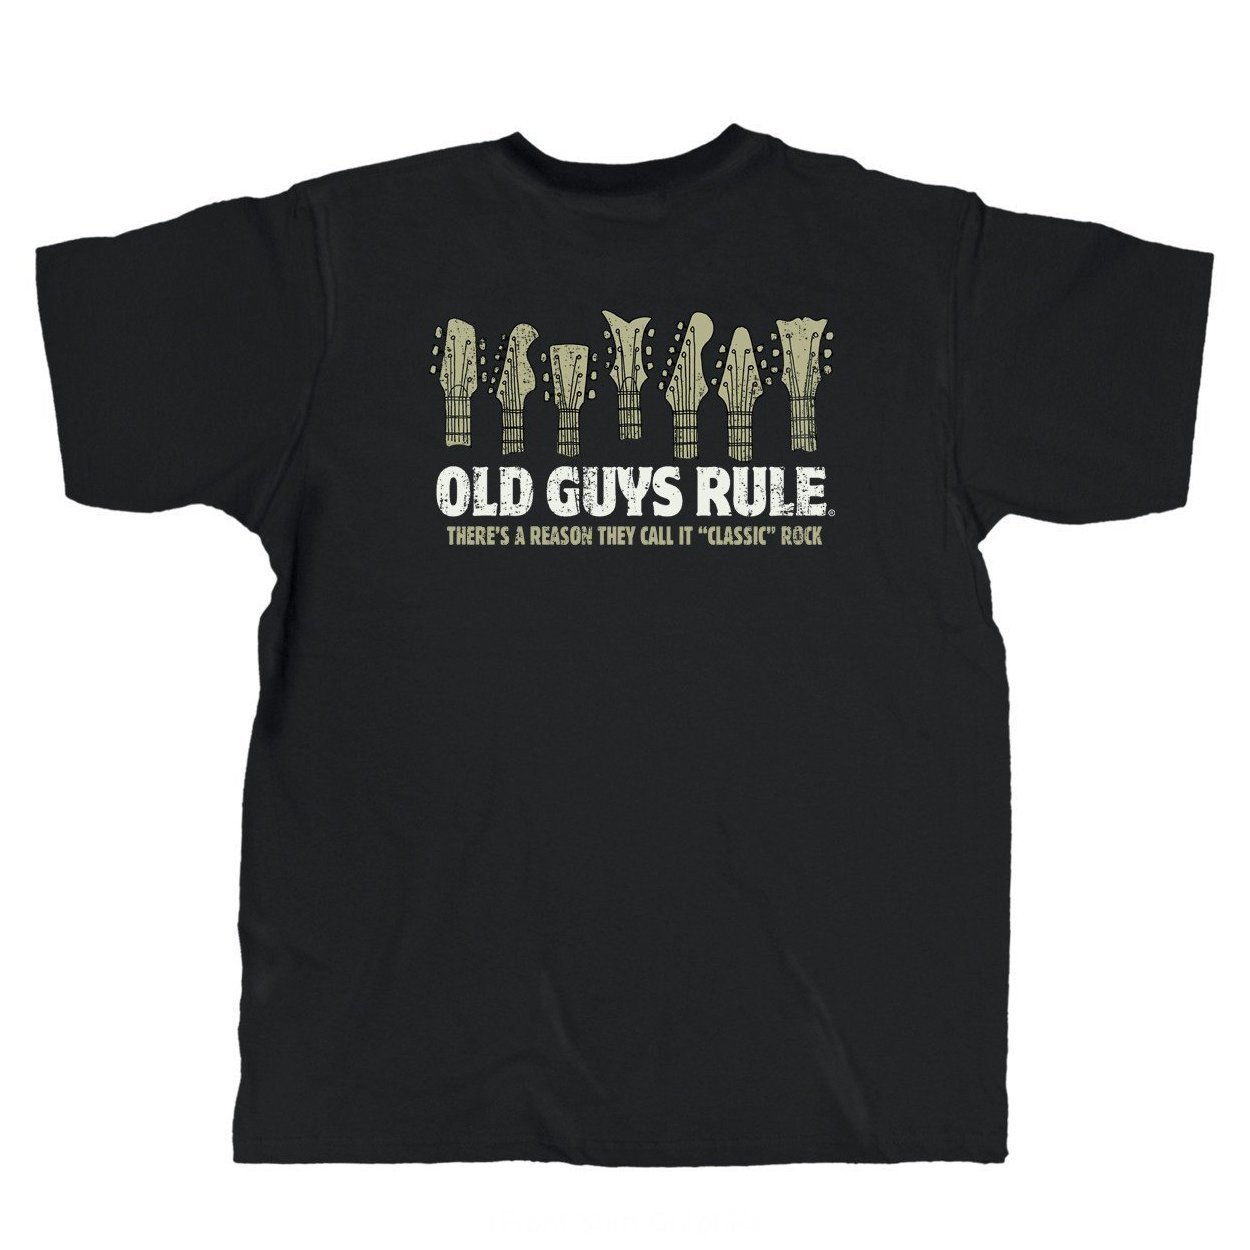 Buy Shirts Online, Buy Classic Shirt For Men's Online